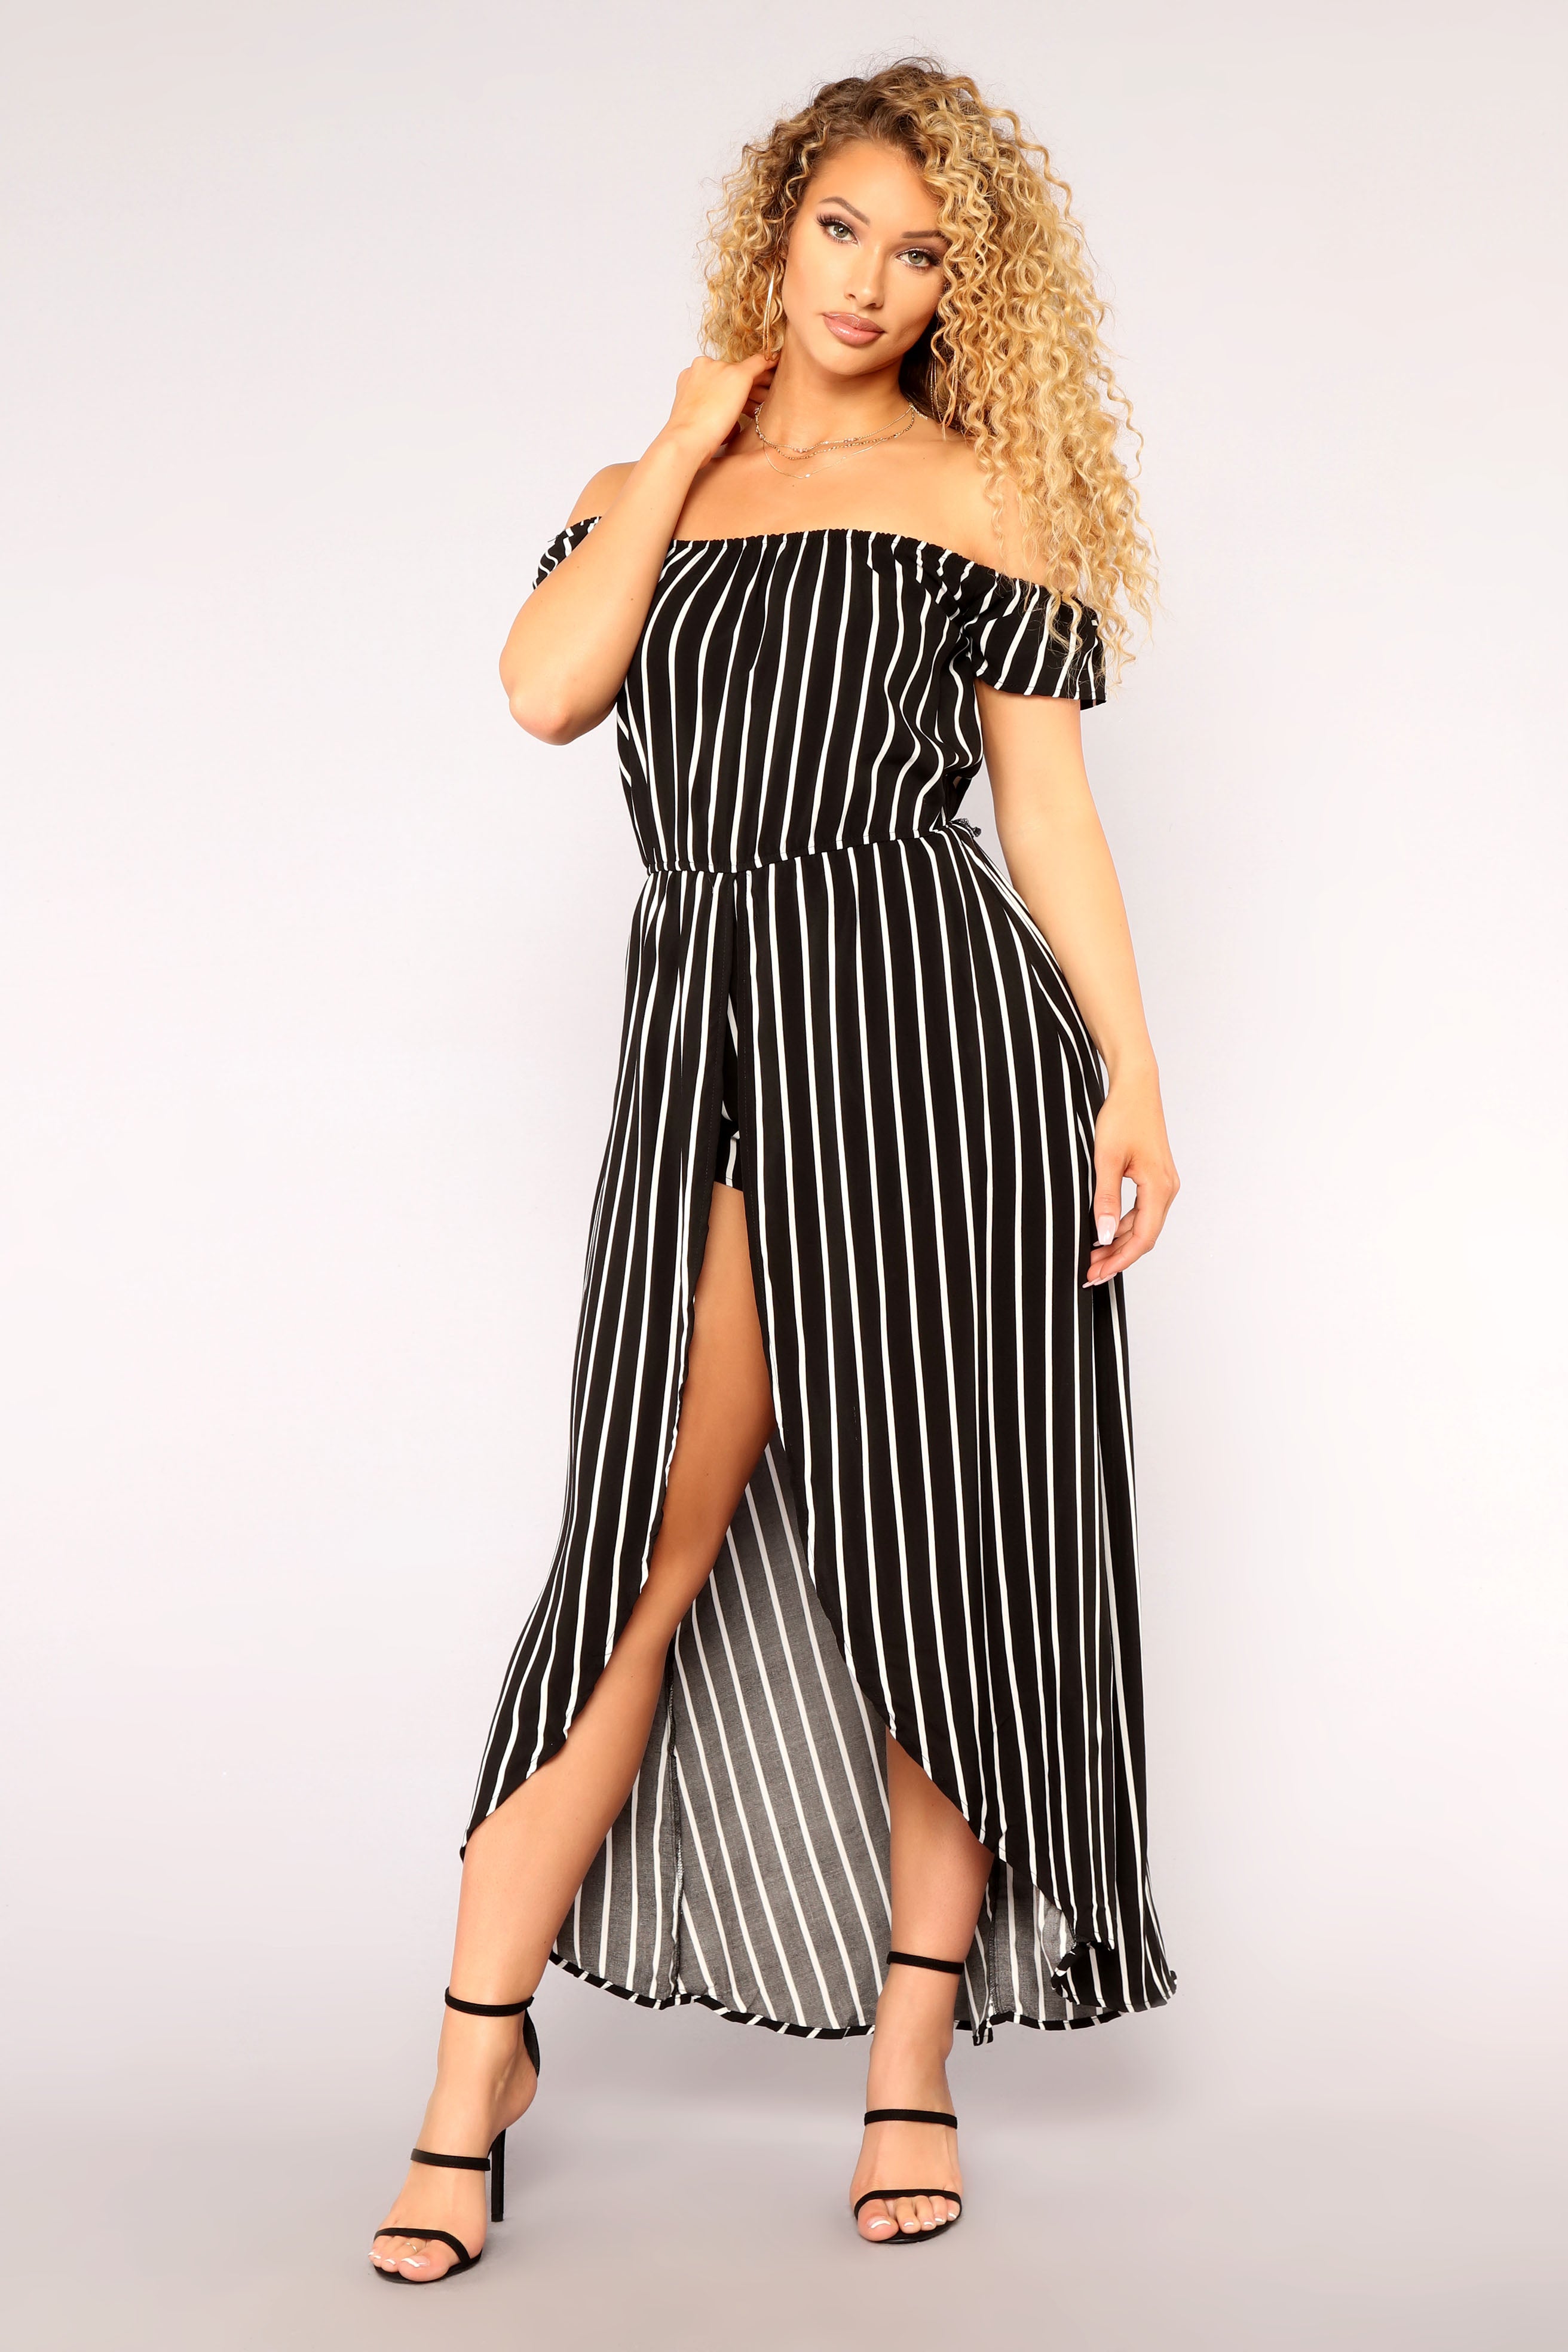 black and white striped romper dress